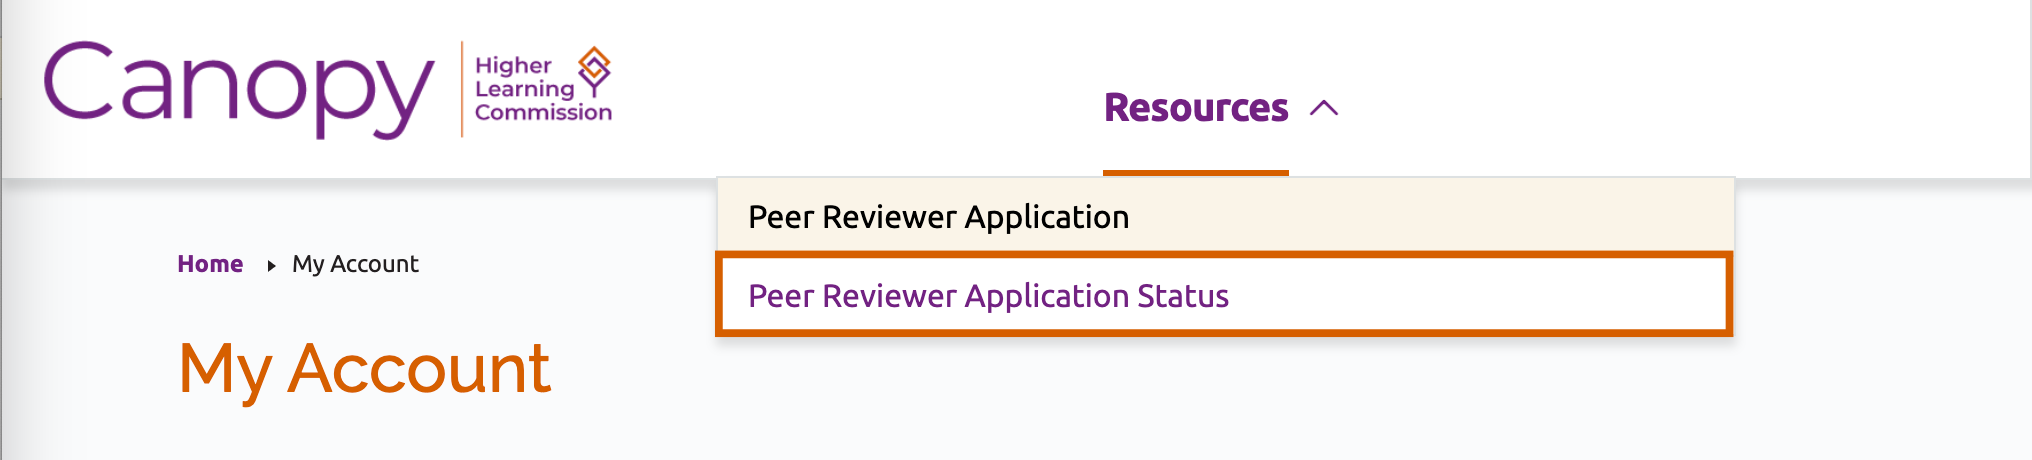 Peer Reviewer Application Status menu